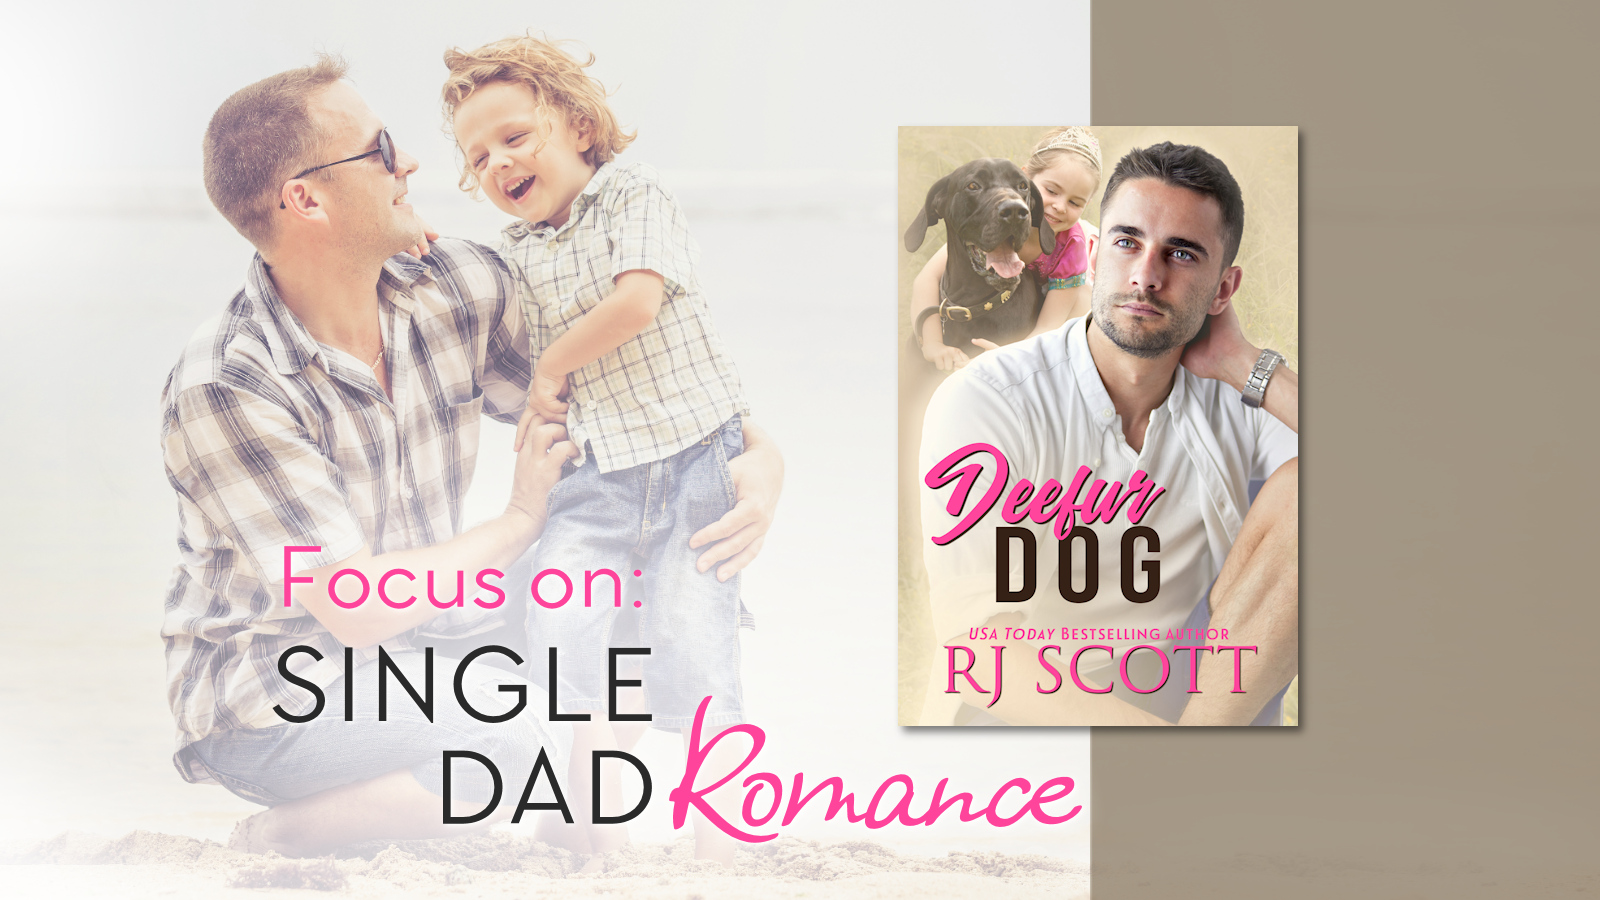 Focus on Single Dads Deefur Dog Standalone MMRomance RJ Scott